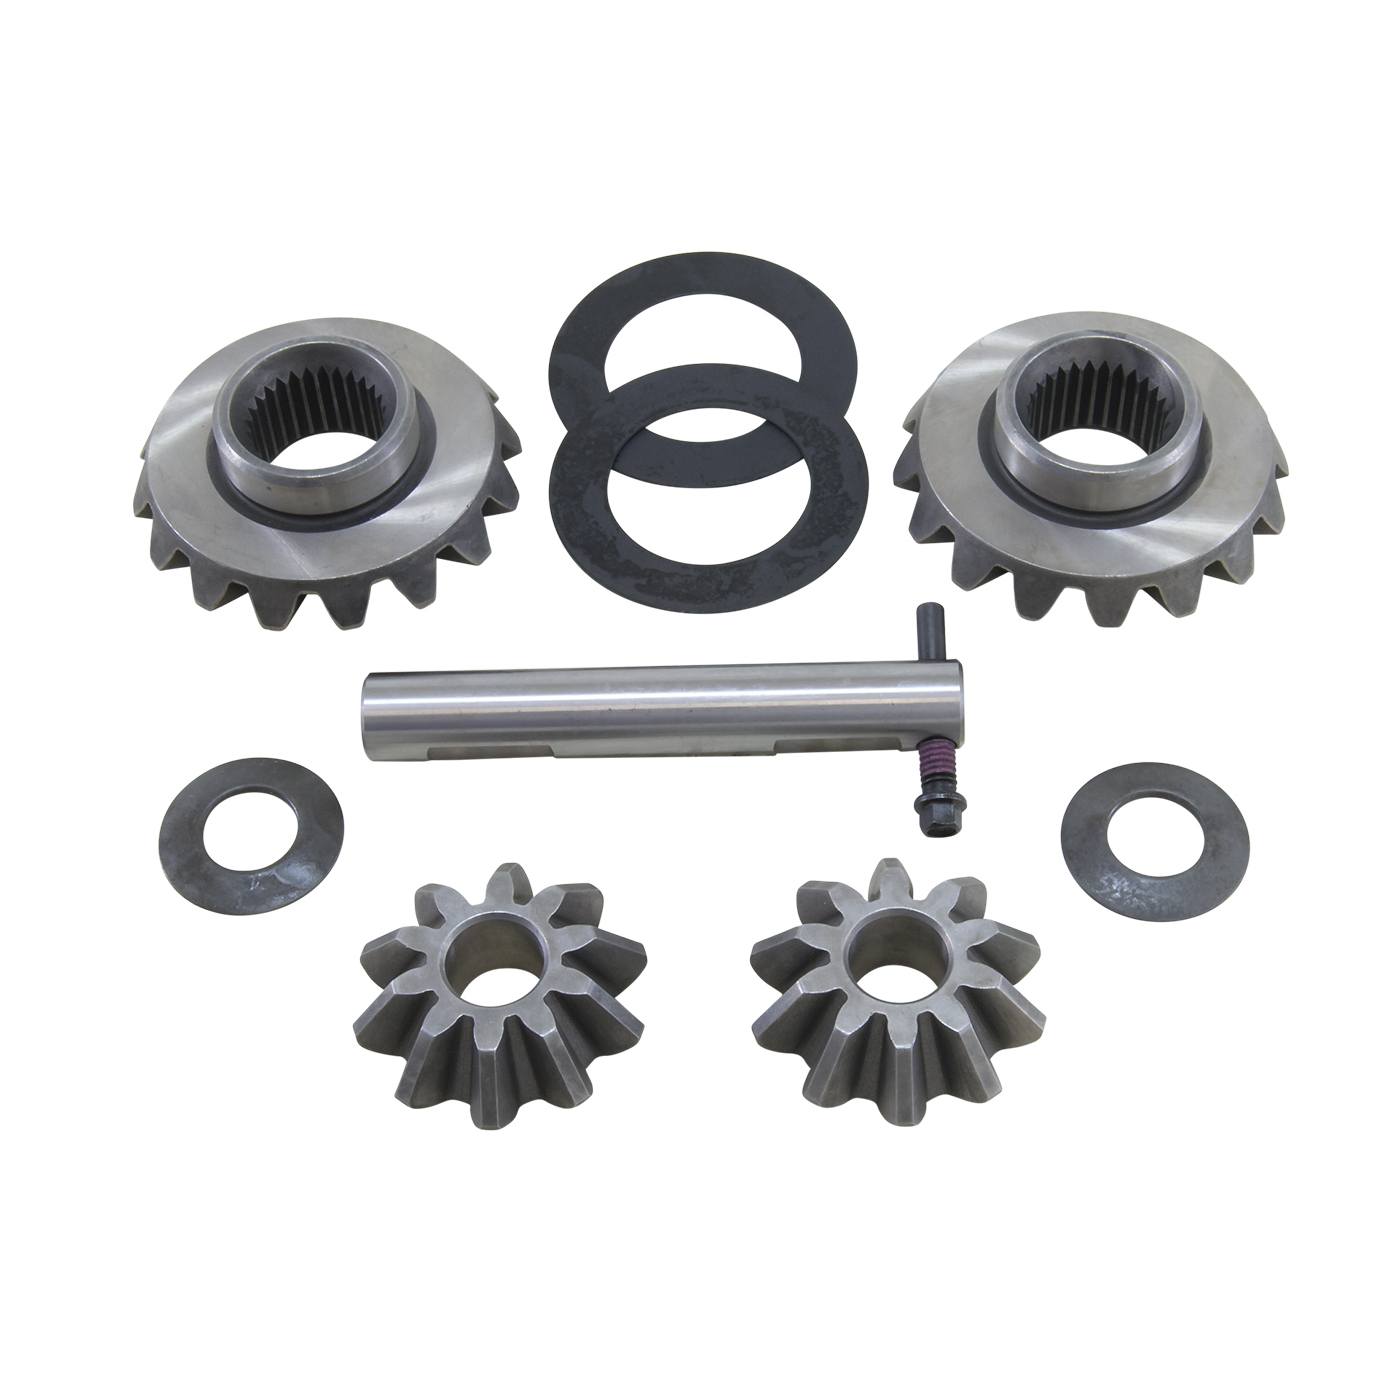 Yukon standard open spider gear kit for 8.8" Ford (and IFS) w/28 spline axles 